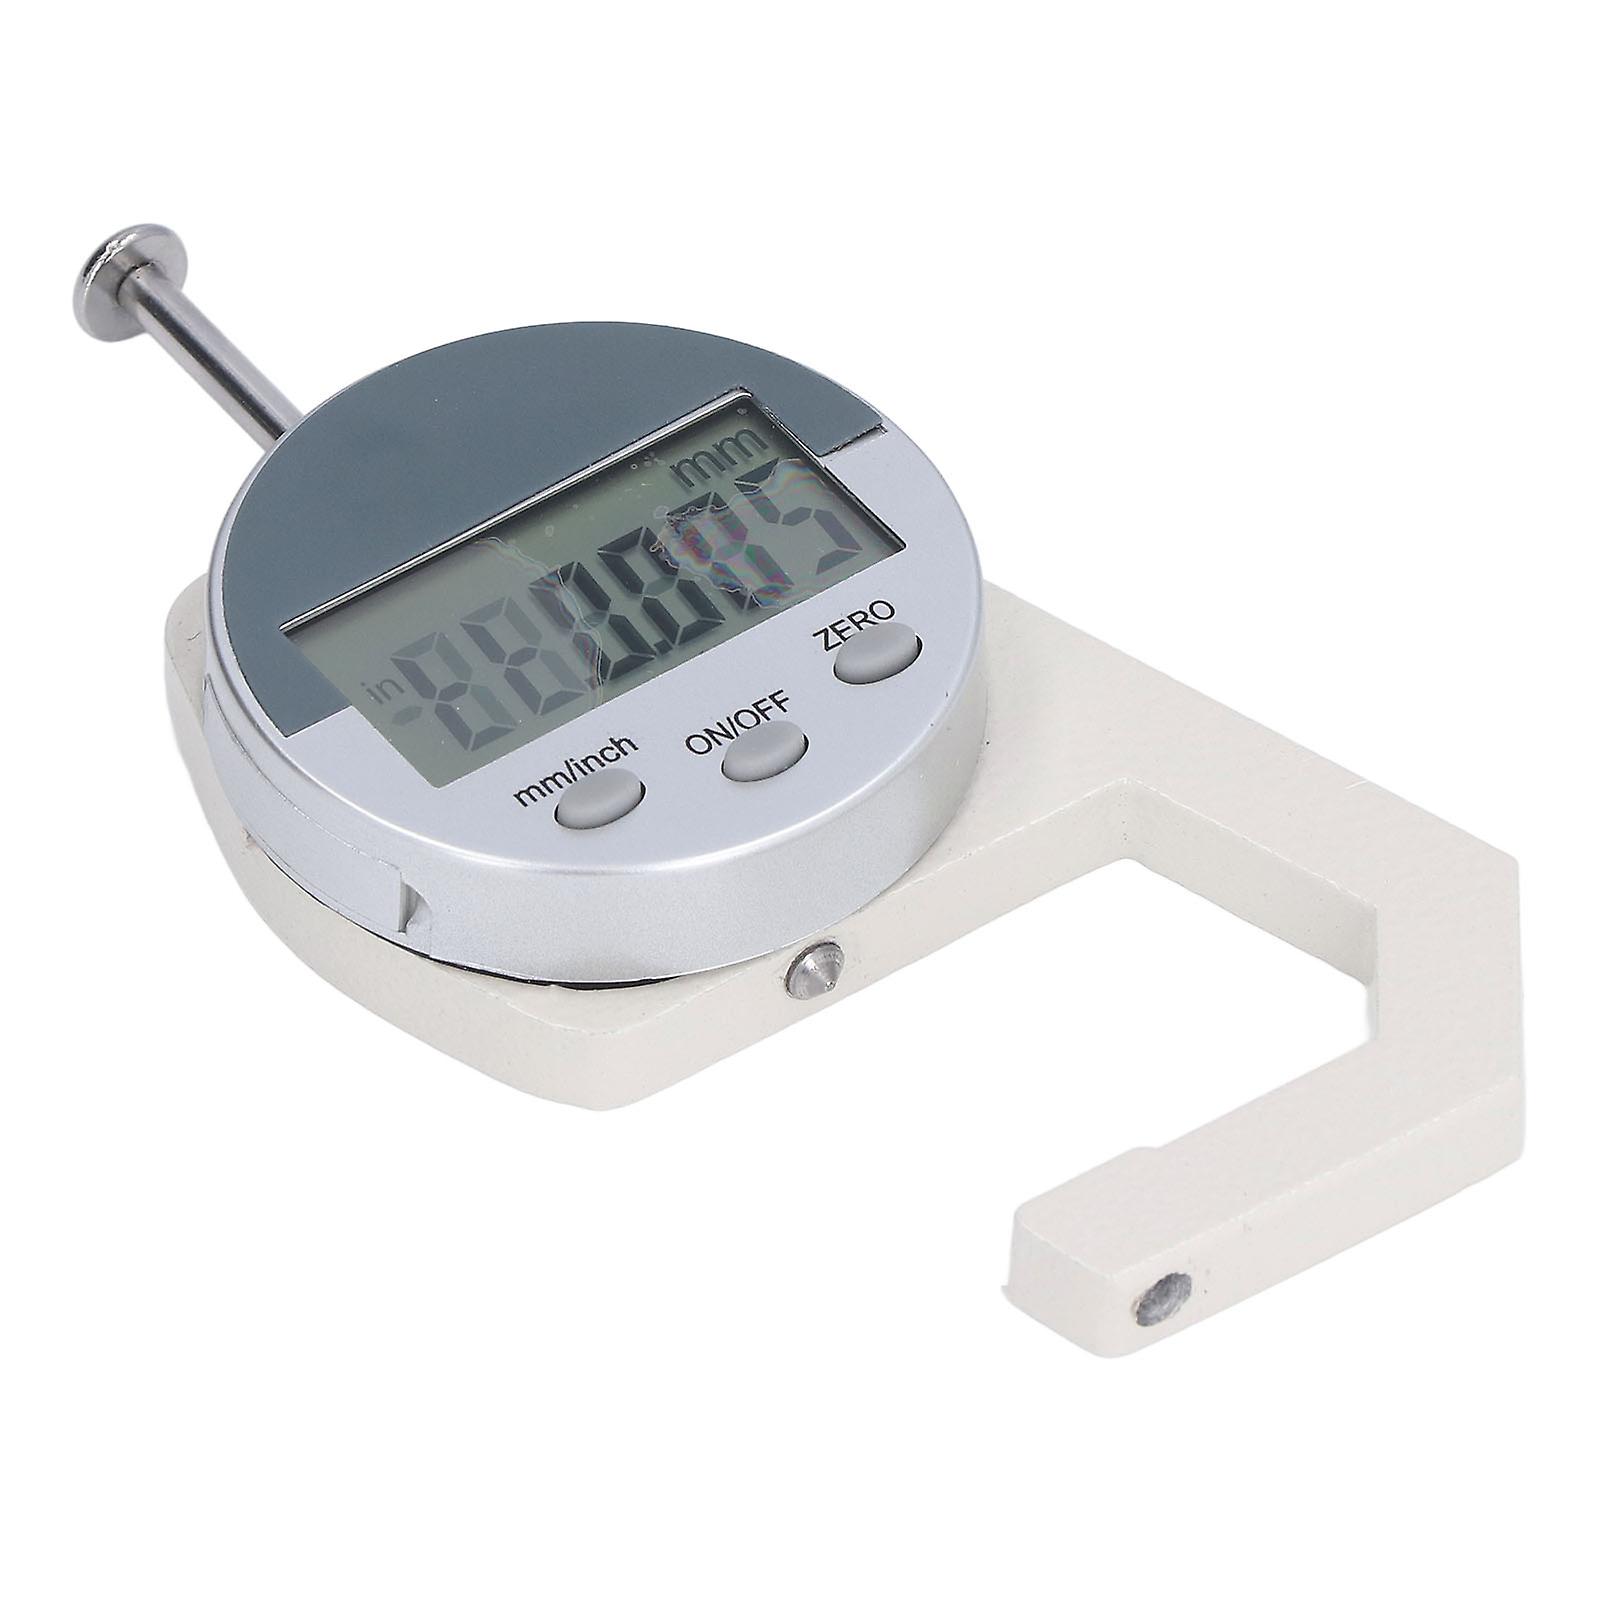 Digital Electronic Thickness Gauge Meter Measuring Tool Mini 0.01mm Thin Metal Micrometer